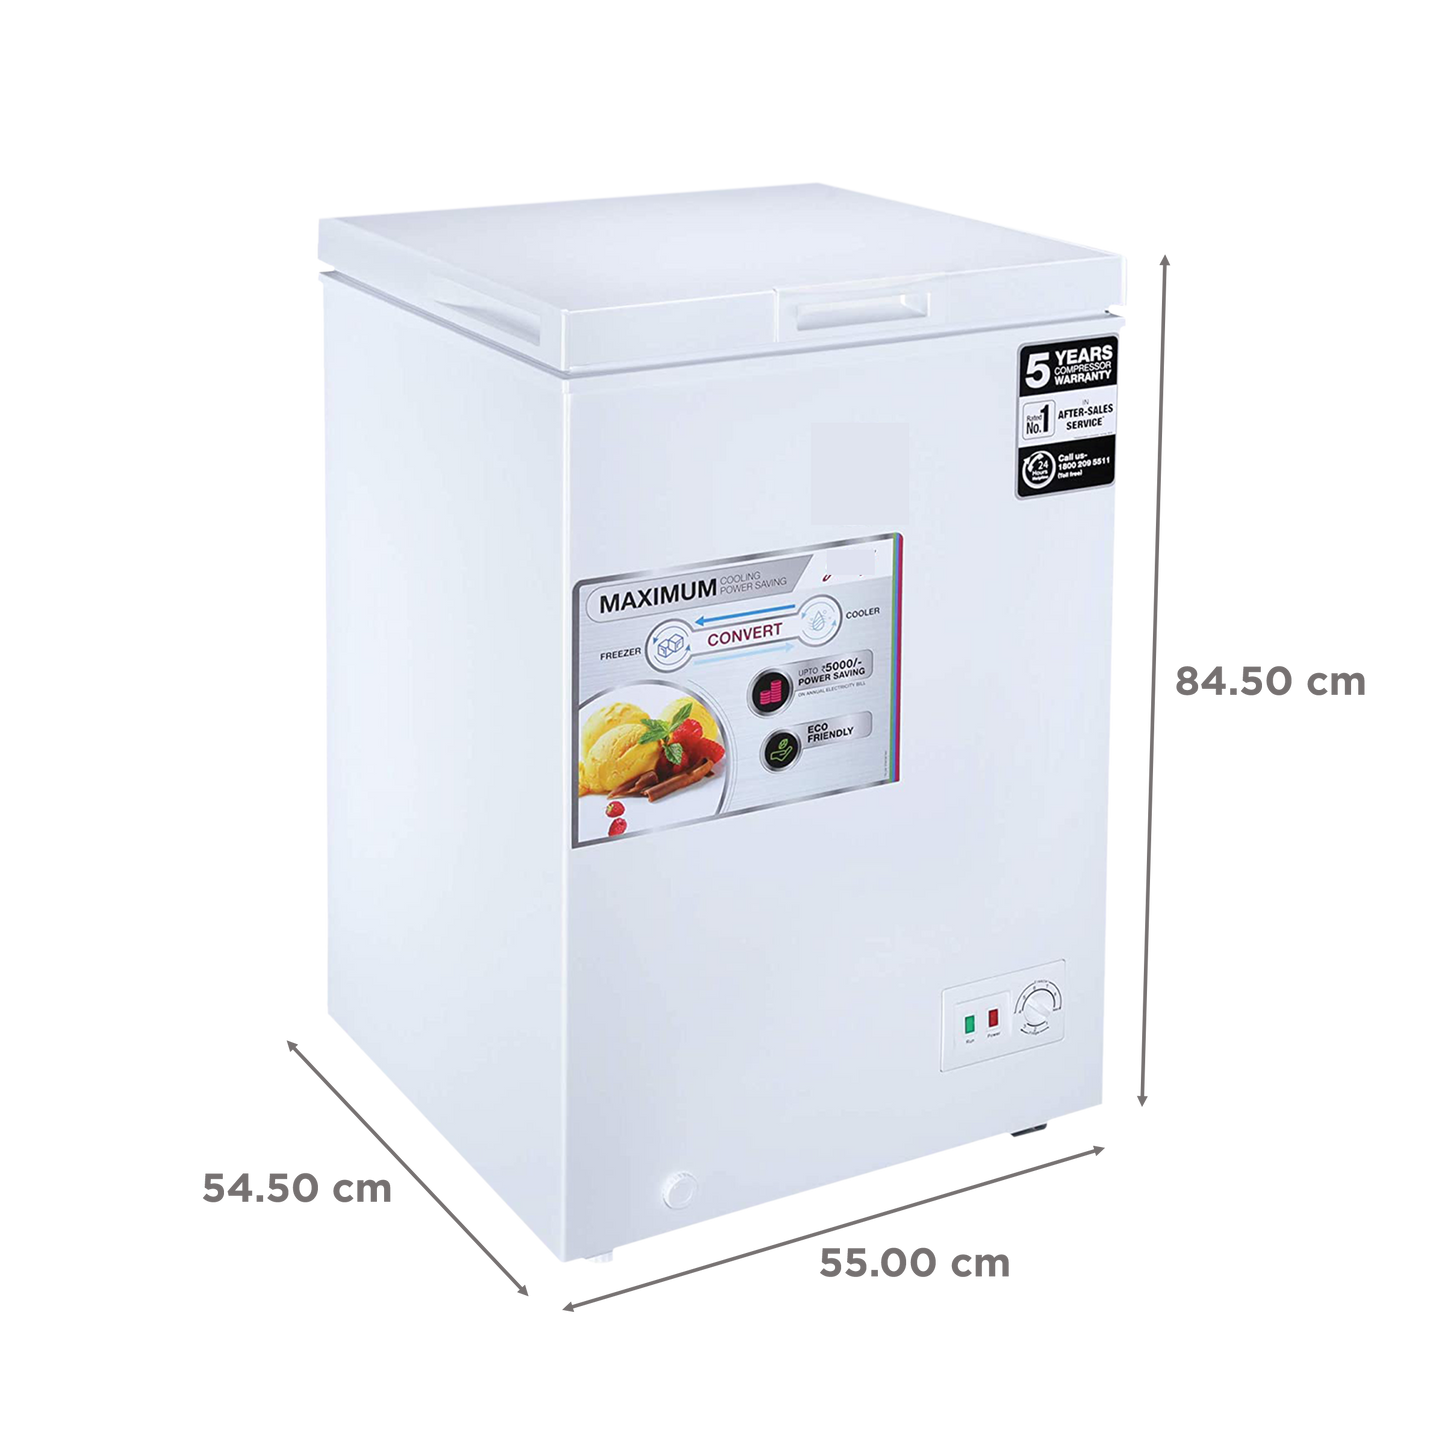 Emtex Slim Series 100 Litres Single Door Deep Freezer (Convertible Technology, DH GCHW 110 R6SHC RW, Royal White)